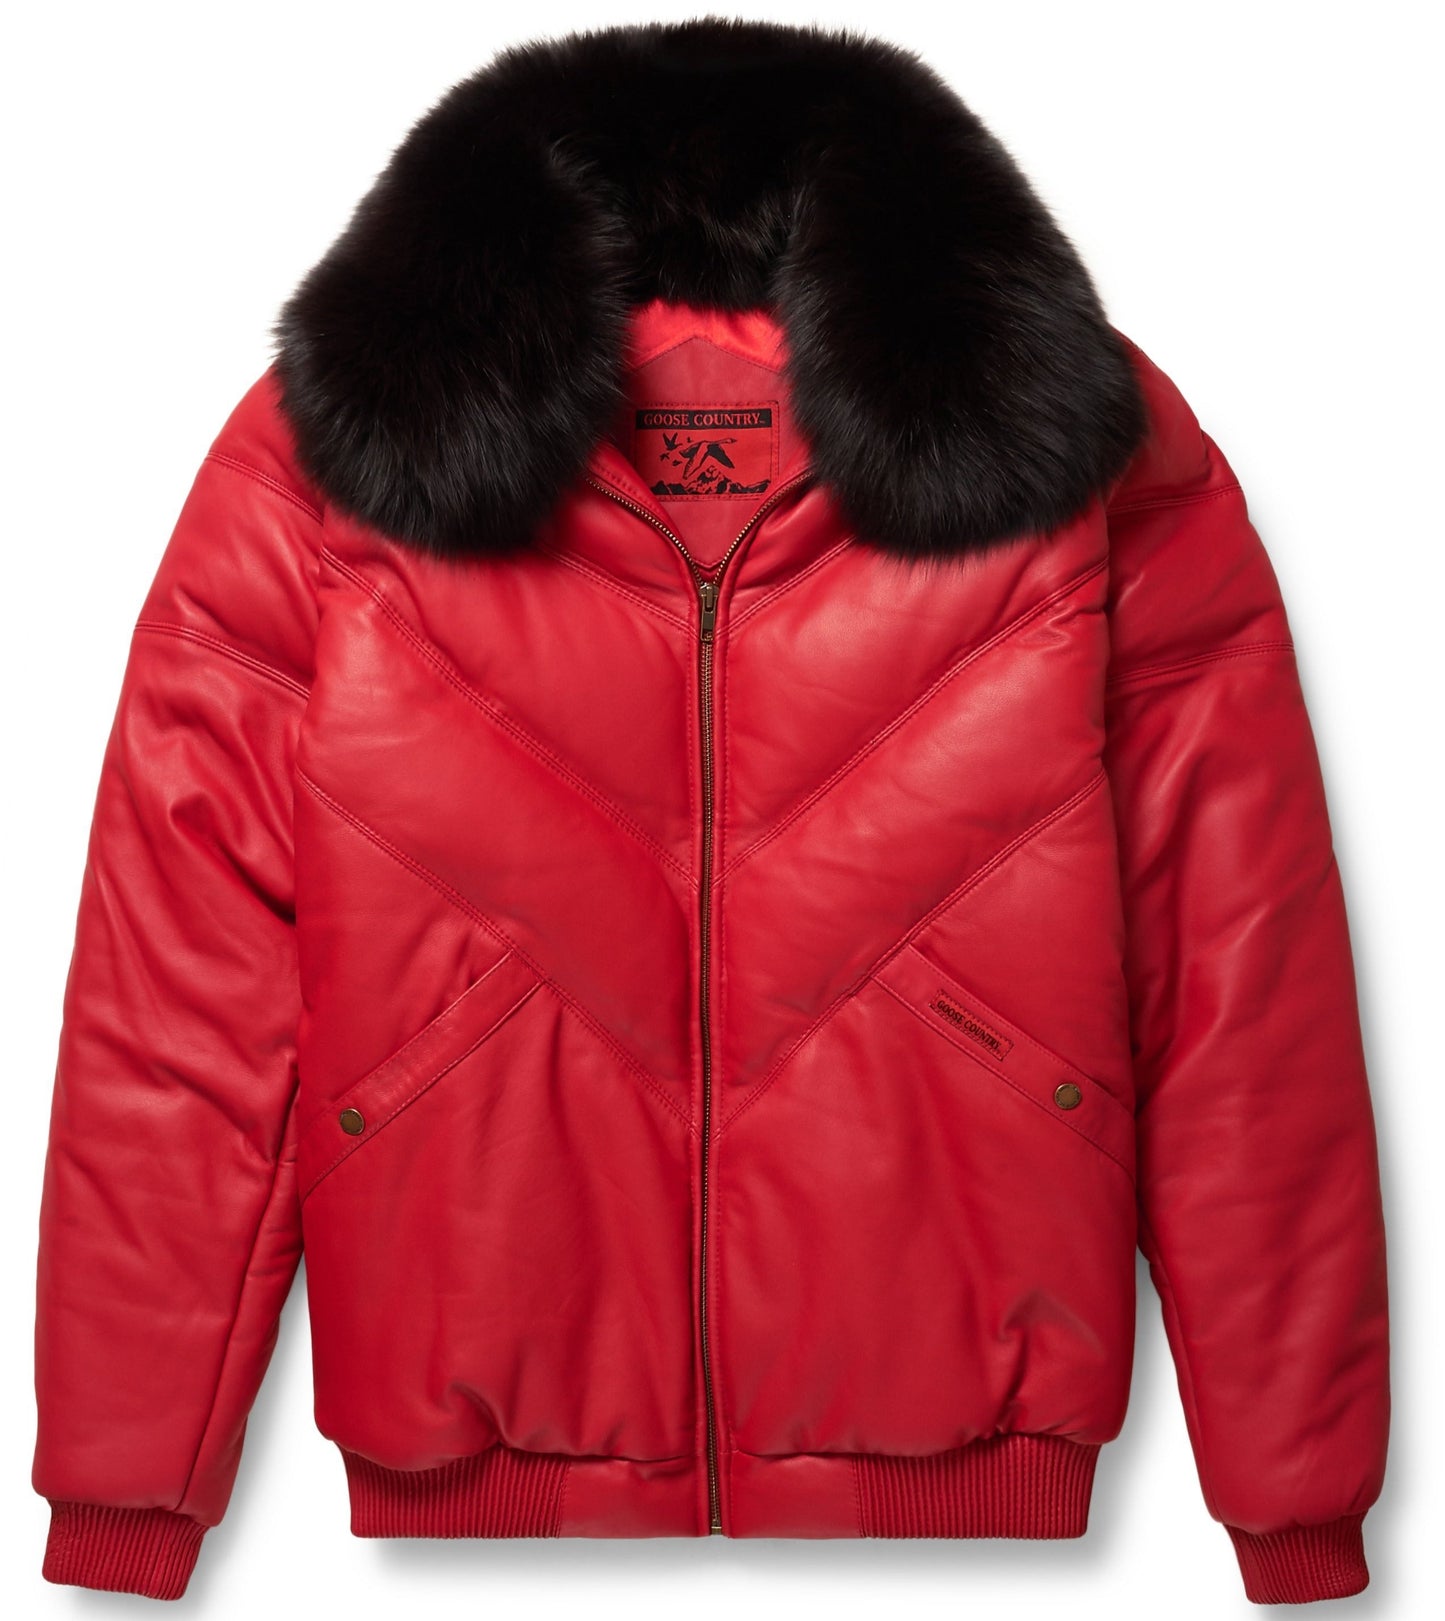 Red Leather V-Bomber Jacket with Black Fur Collar